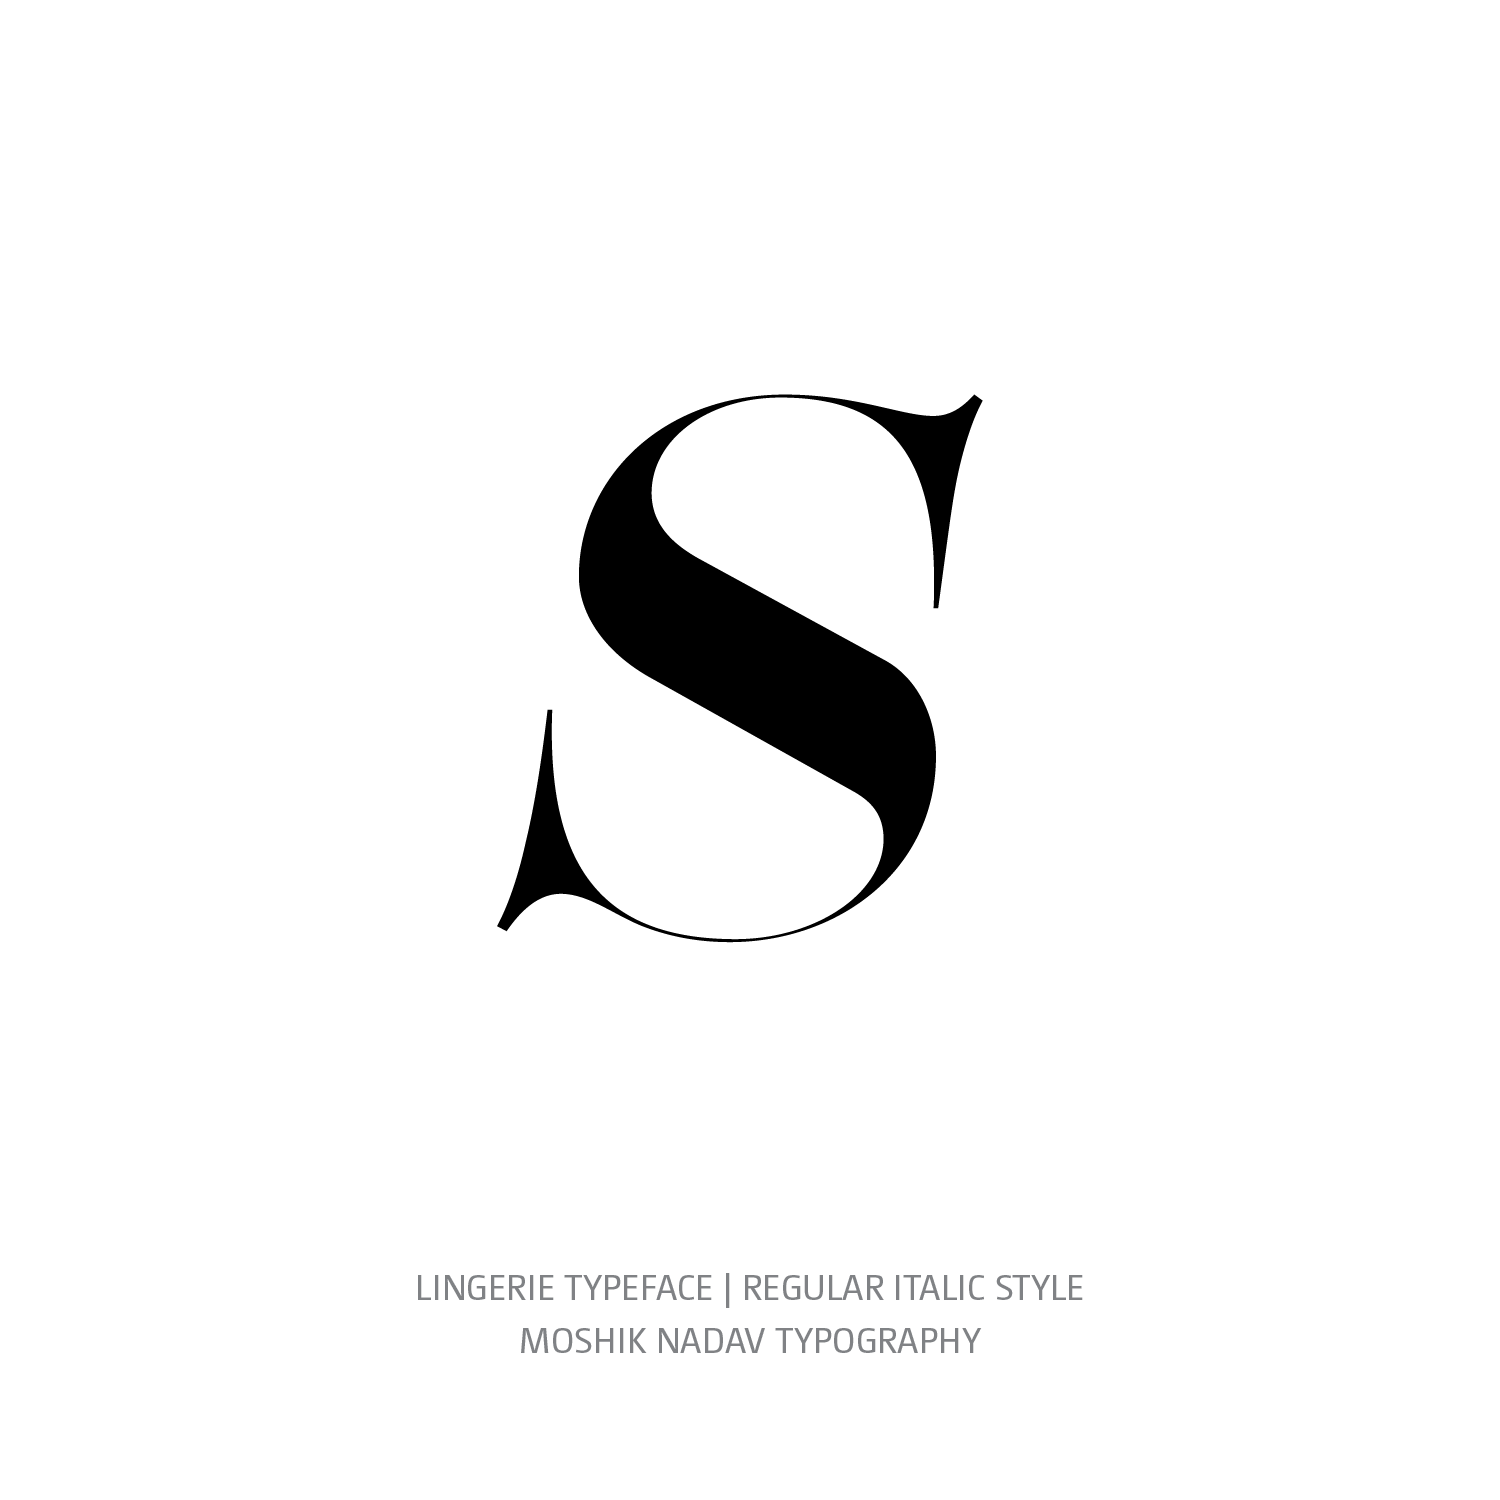 Lingerie Typeface Regular Italic s - Fashion fonts by Moshik Nadav Typography